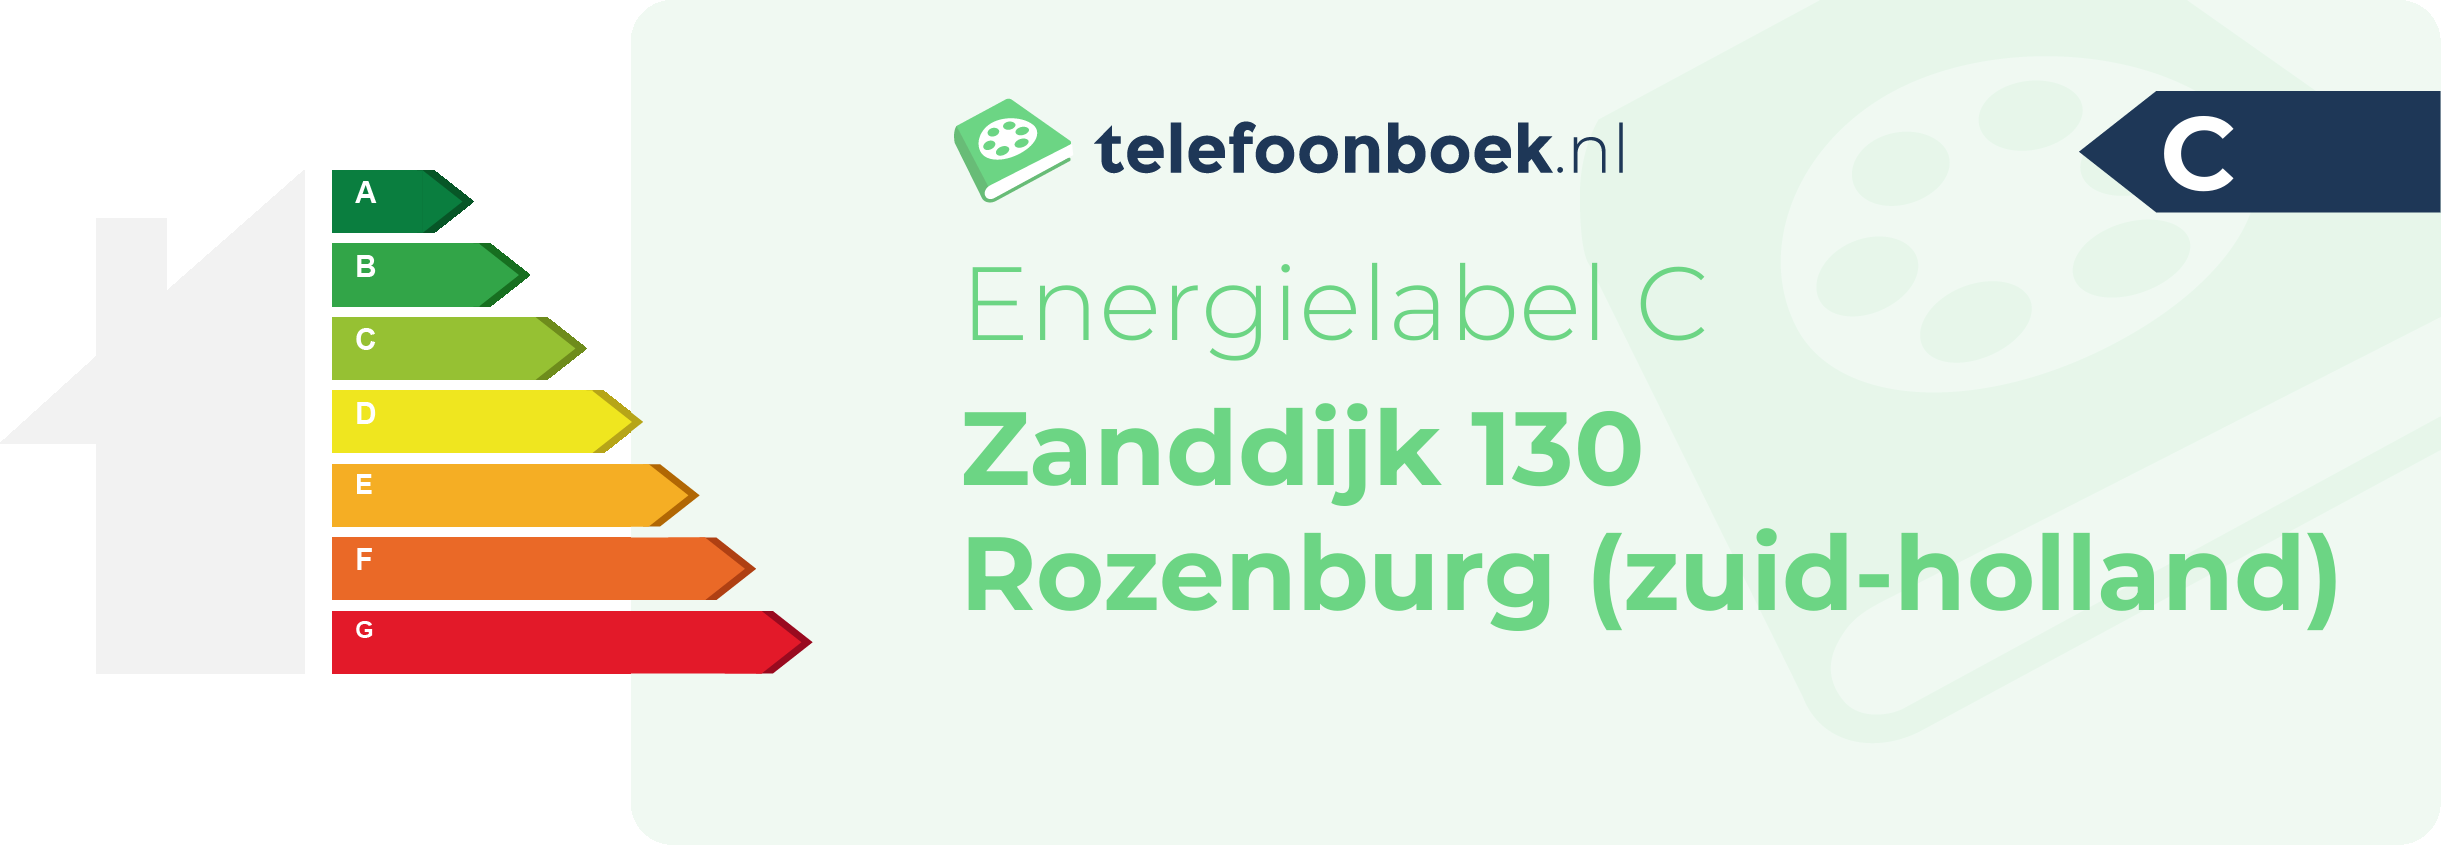 Energielabel Zanddijk 130 Rozenburg (Zuid-Holland)